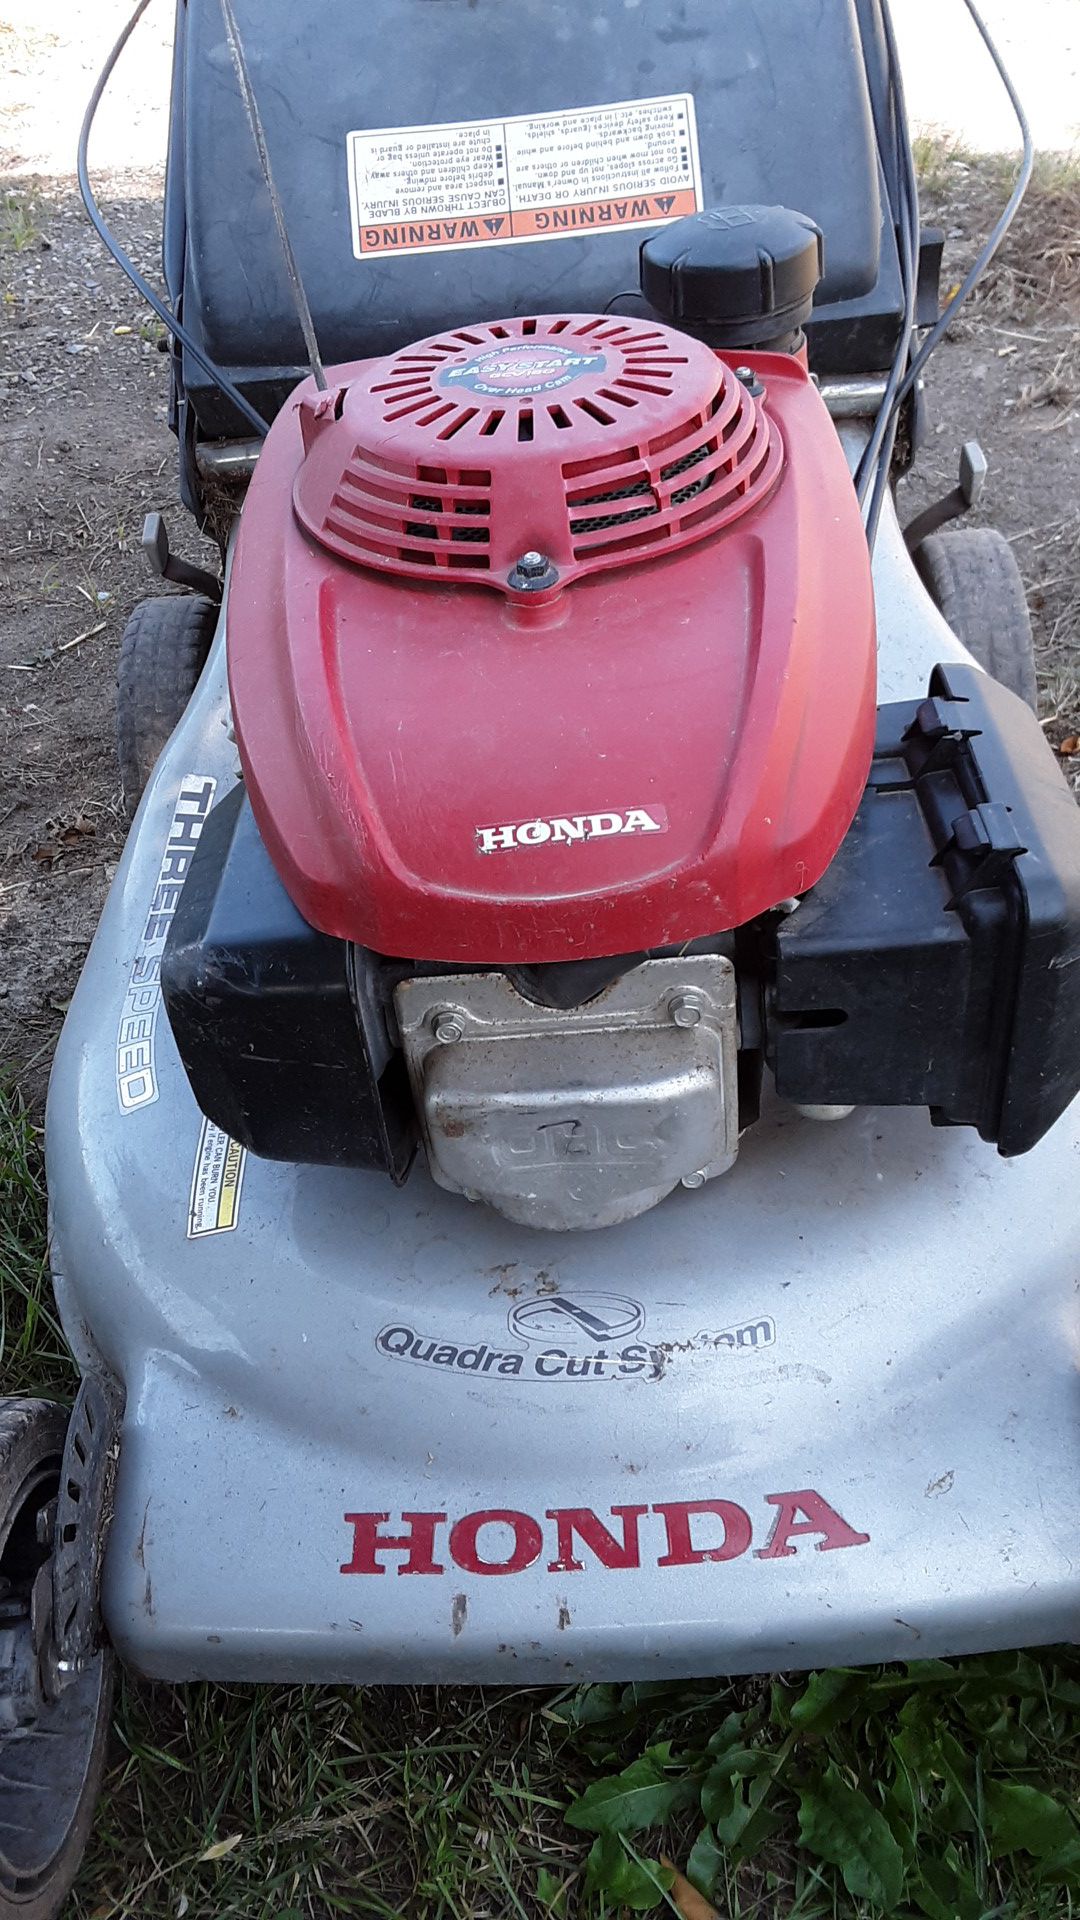 Honda high performance easy start. Self-propelled lawn mower